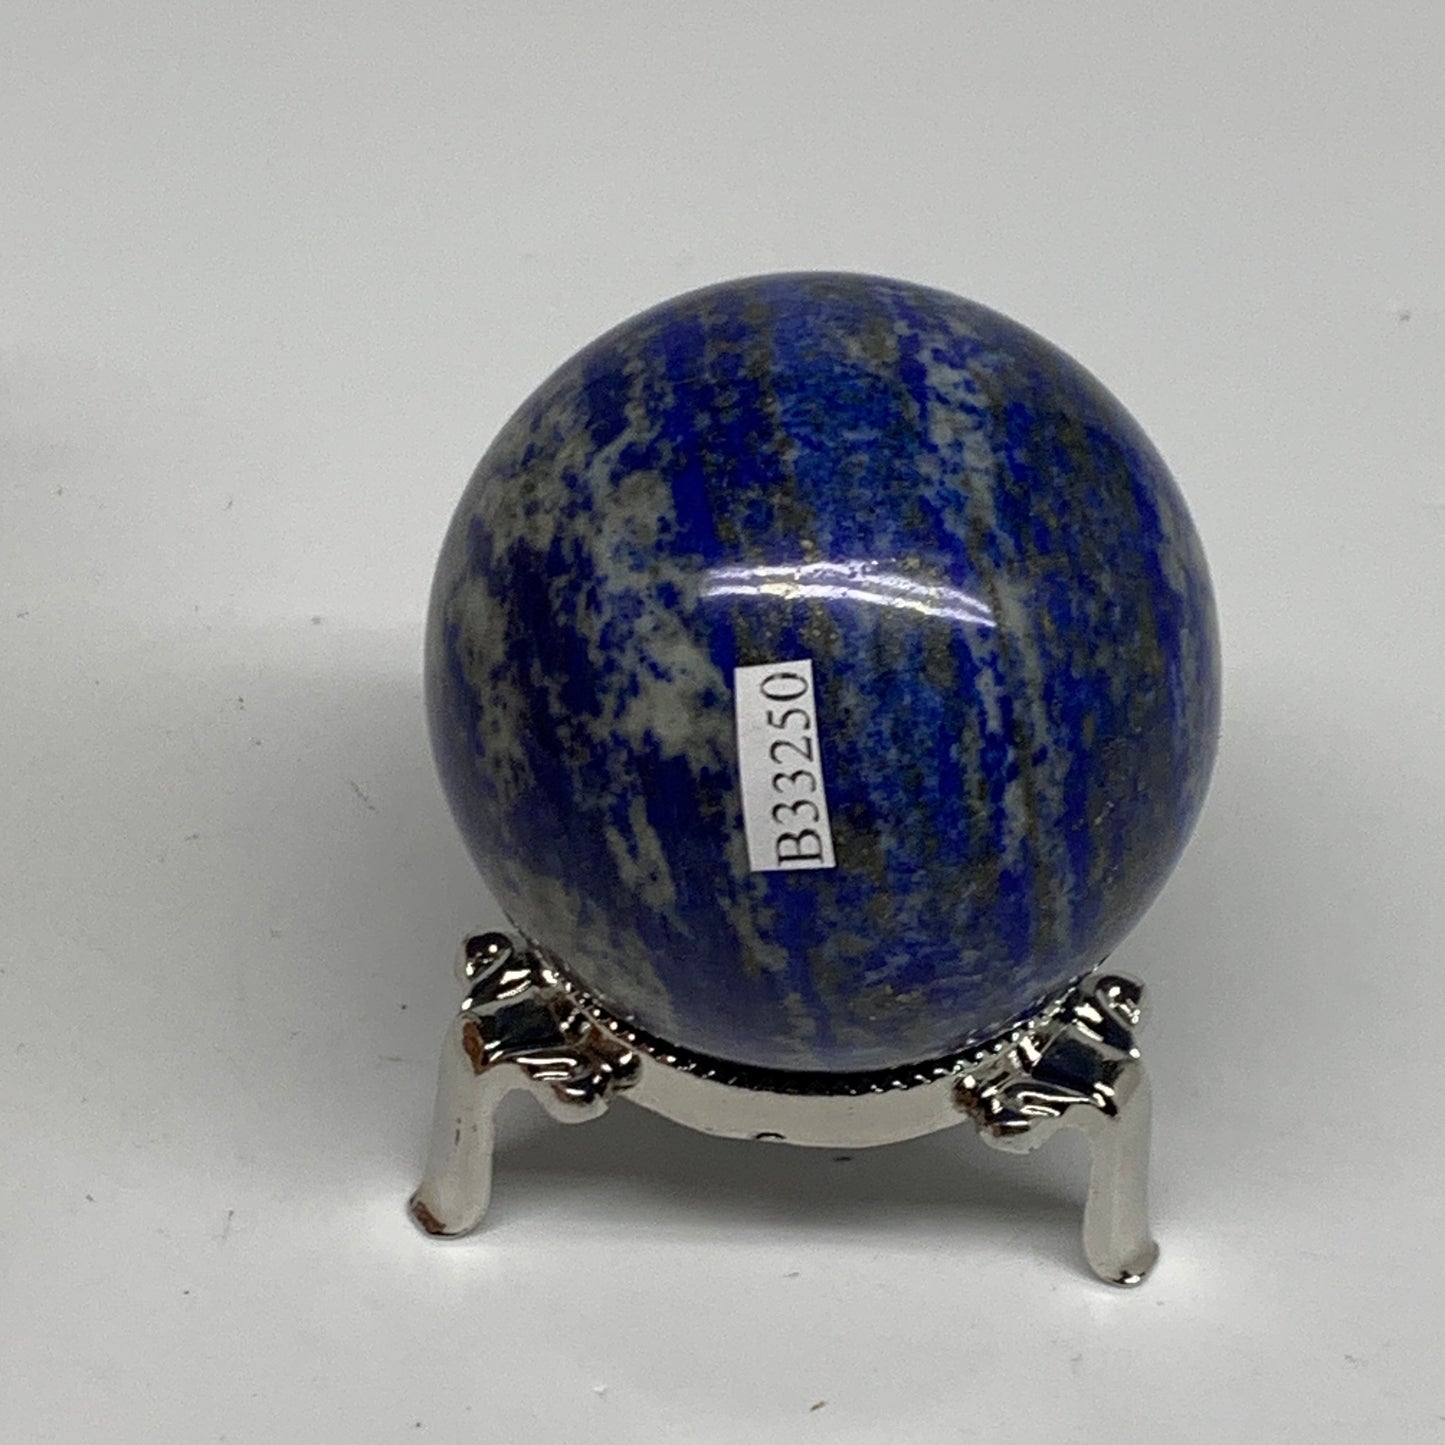 0.59 lbs, 2.1" (55mm), Lapis Lazuli Sphere Ball Gemstone @Afghanistan, B33250